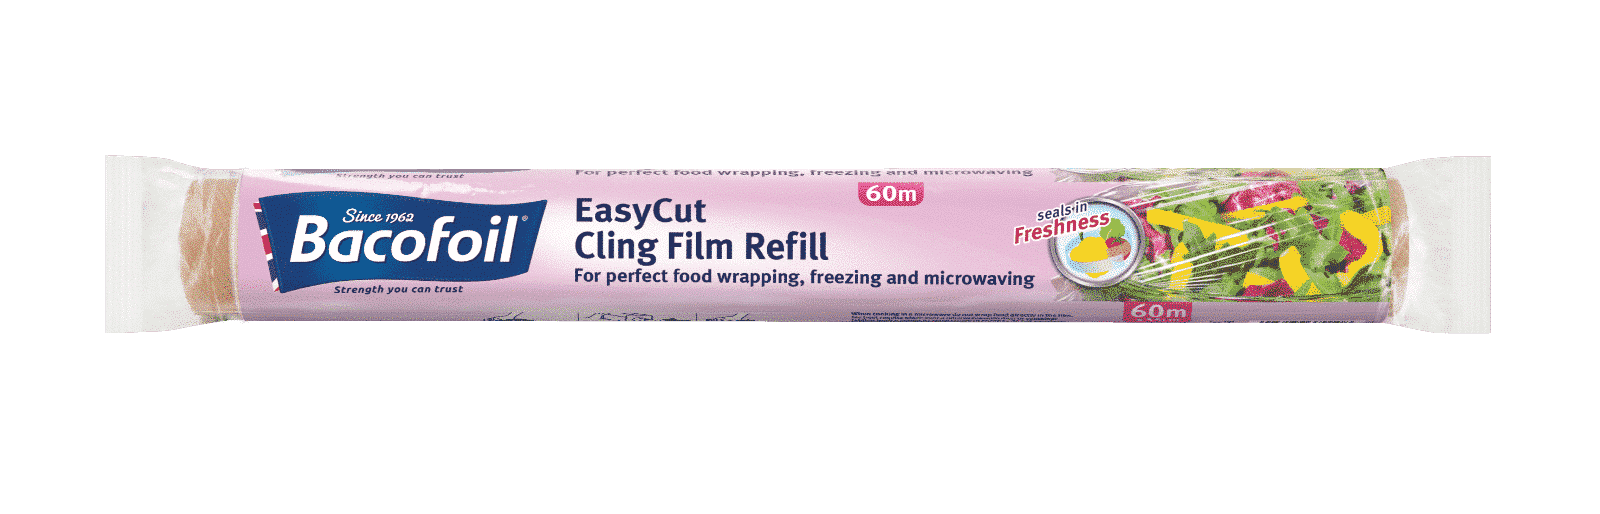 Bacofoil Easycut Cling Film Refill, 60m 0108